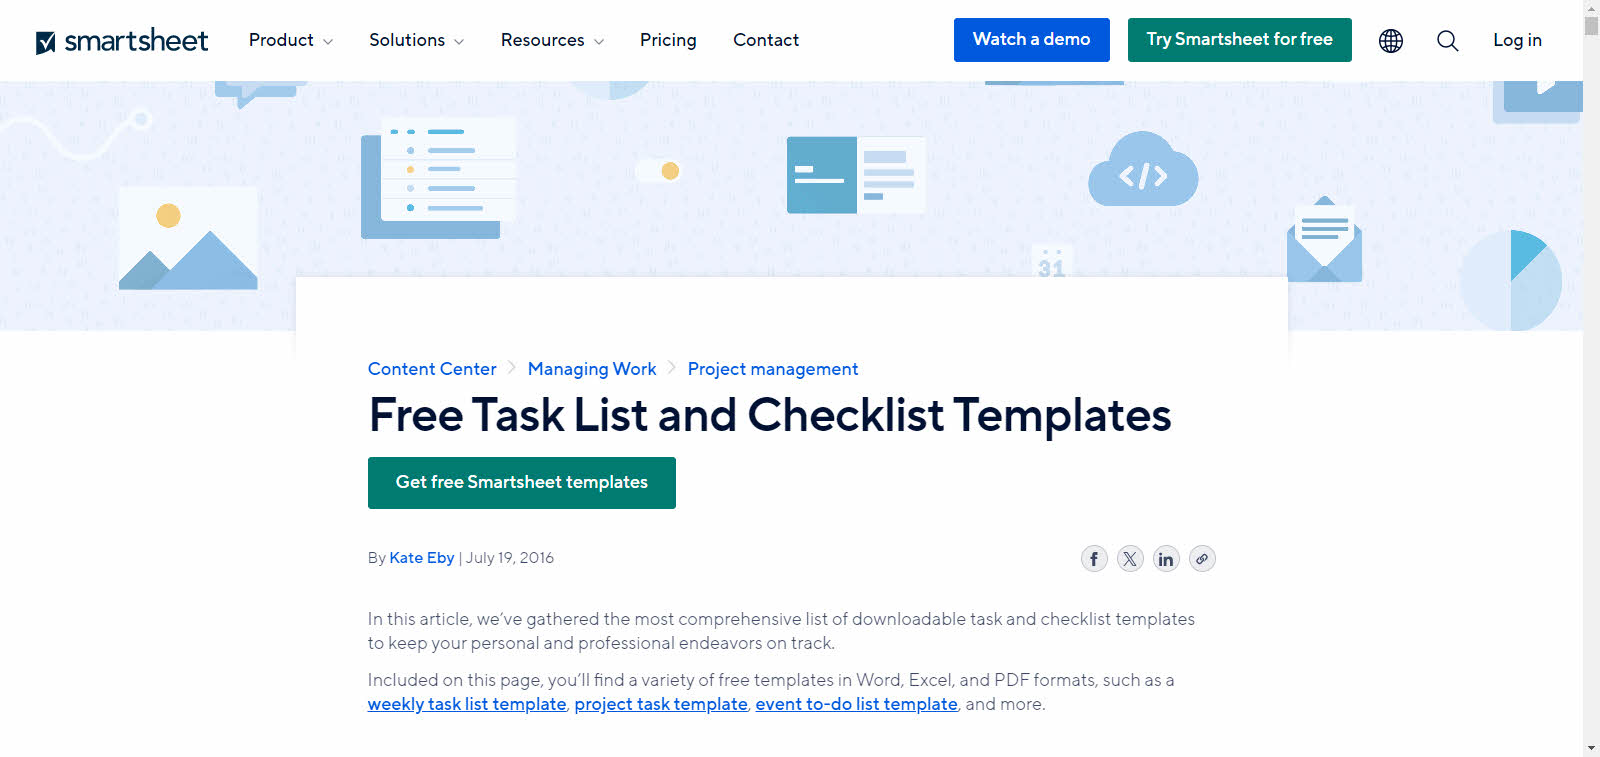 Smartsheet Free Task List and Checklist Templates 